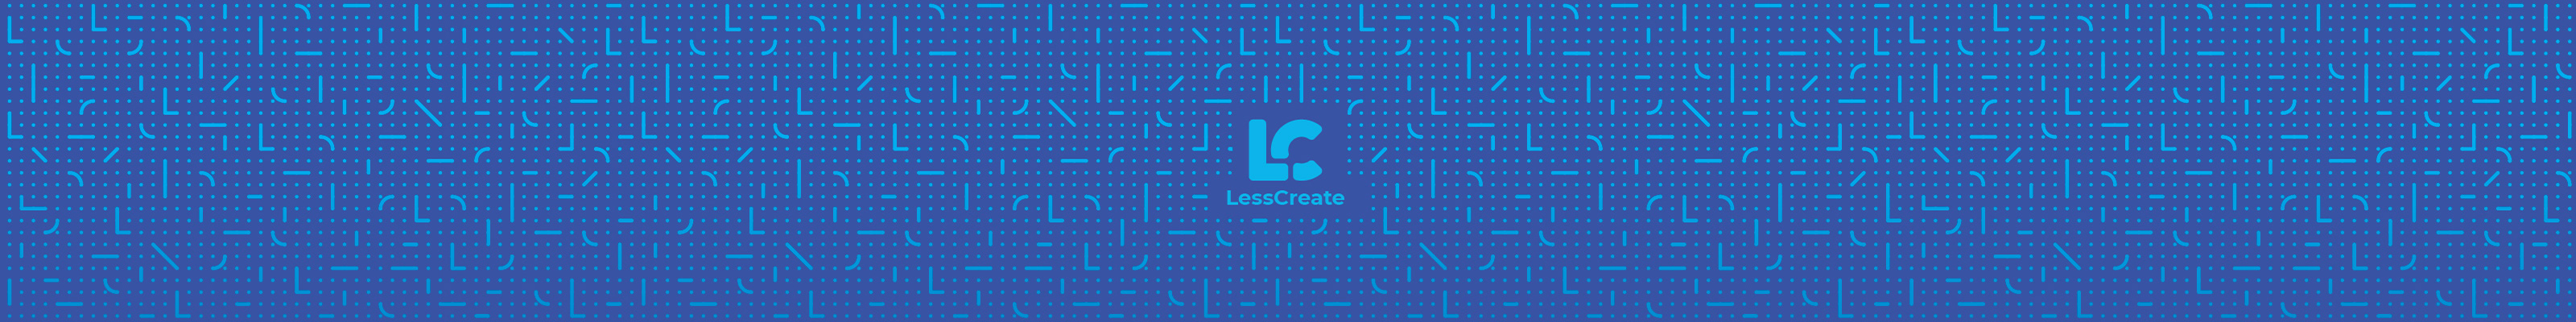 Less Create's profile banner